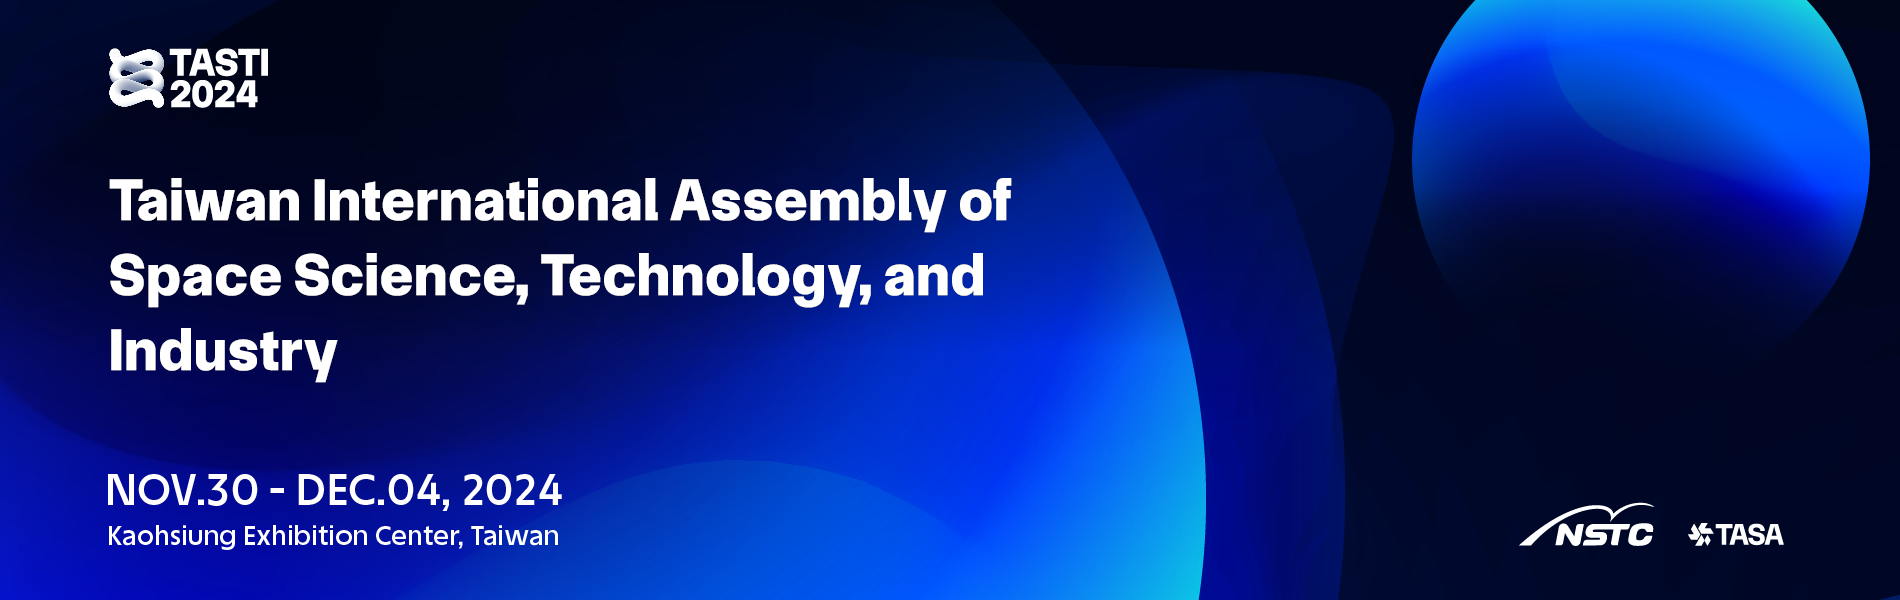 國家太空中心 - 2024年台灣太空國際年會(Taiwan international Assembly of Space Science, Technology, and Industry, TASTI) (11/30-12/4)